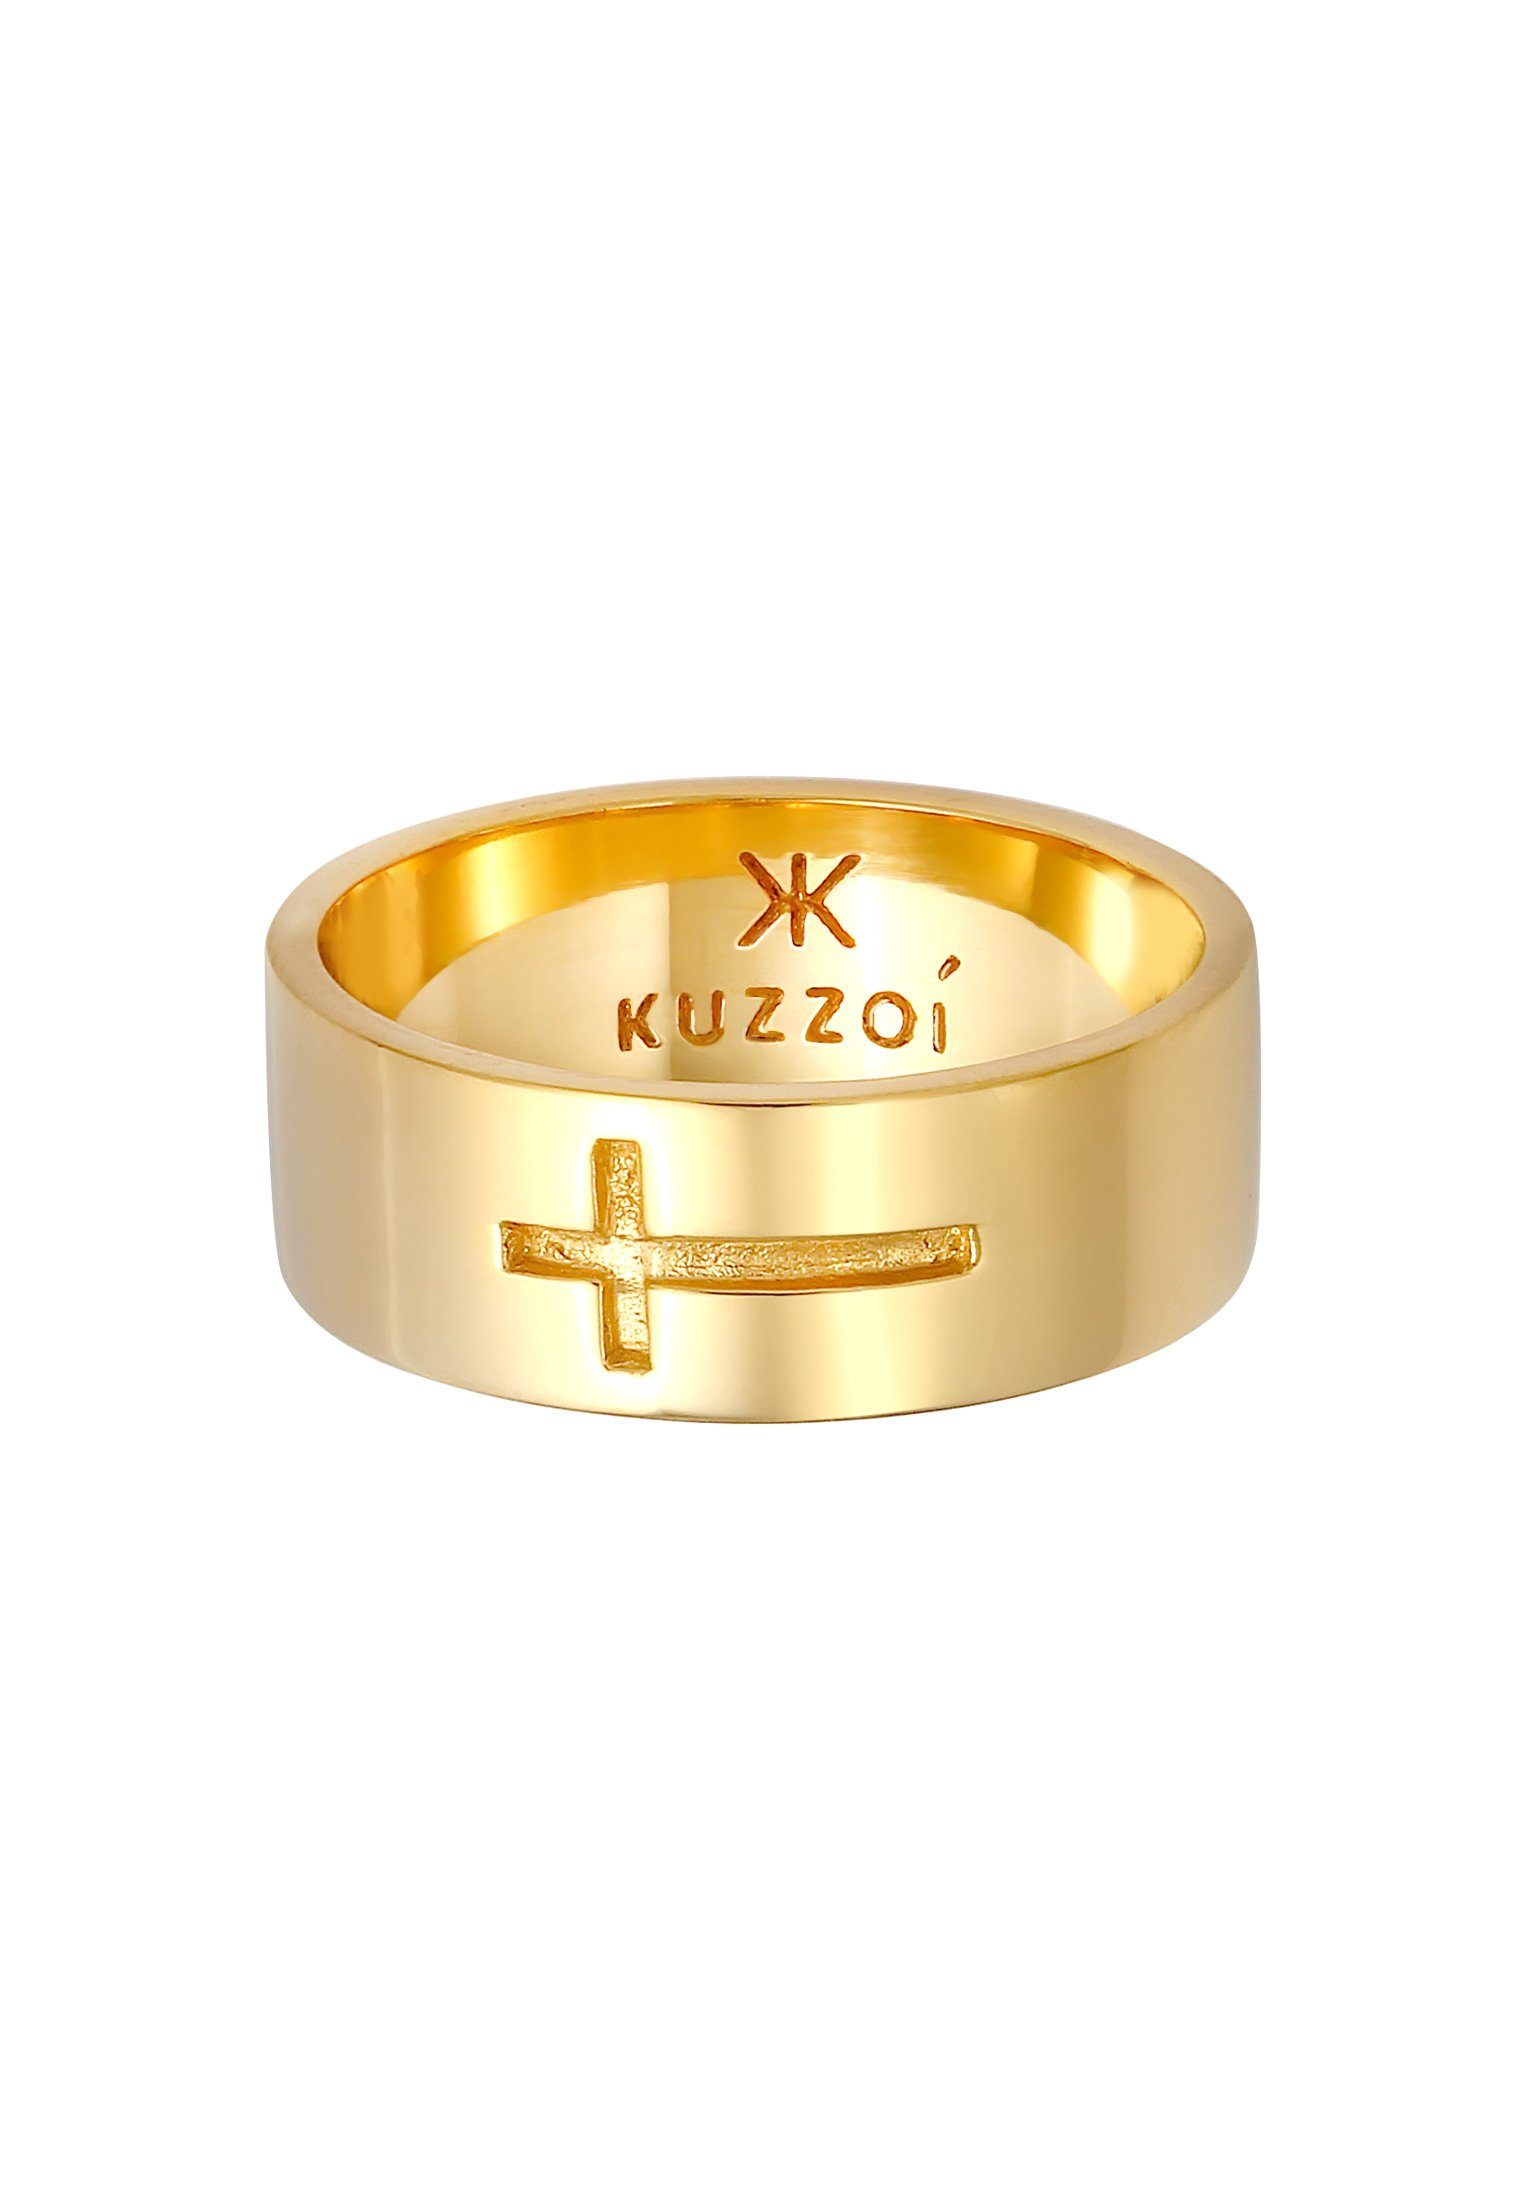 Kuzzoi Silberring Kreuz Glanz Bandring Gold Silber Herren 925